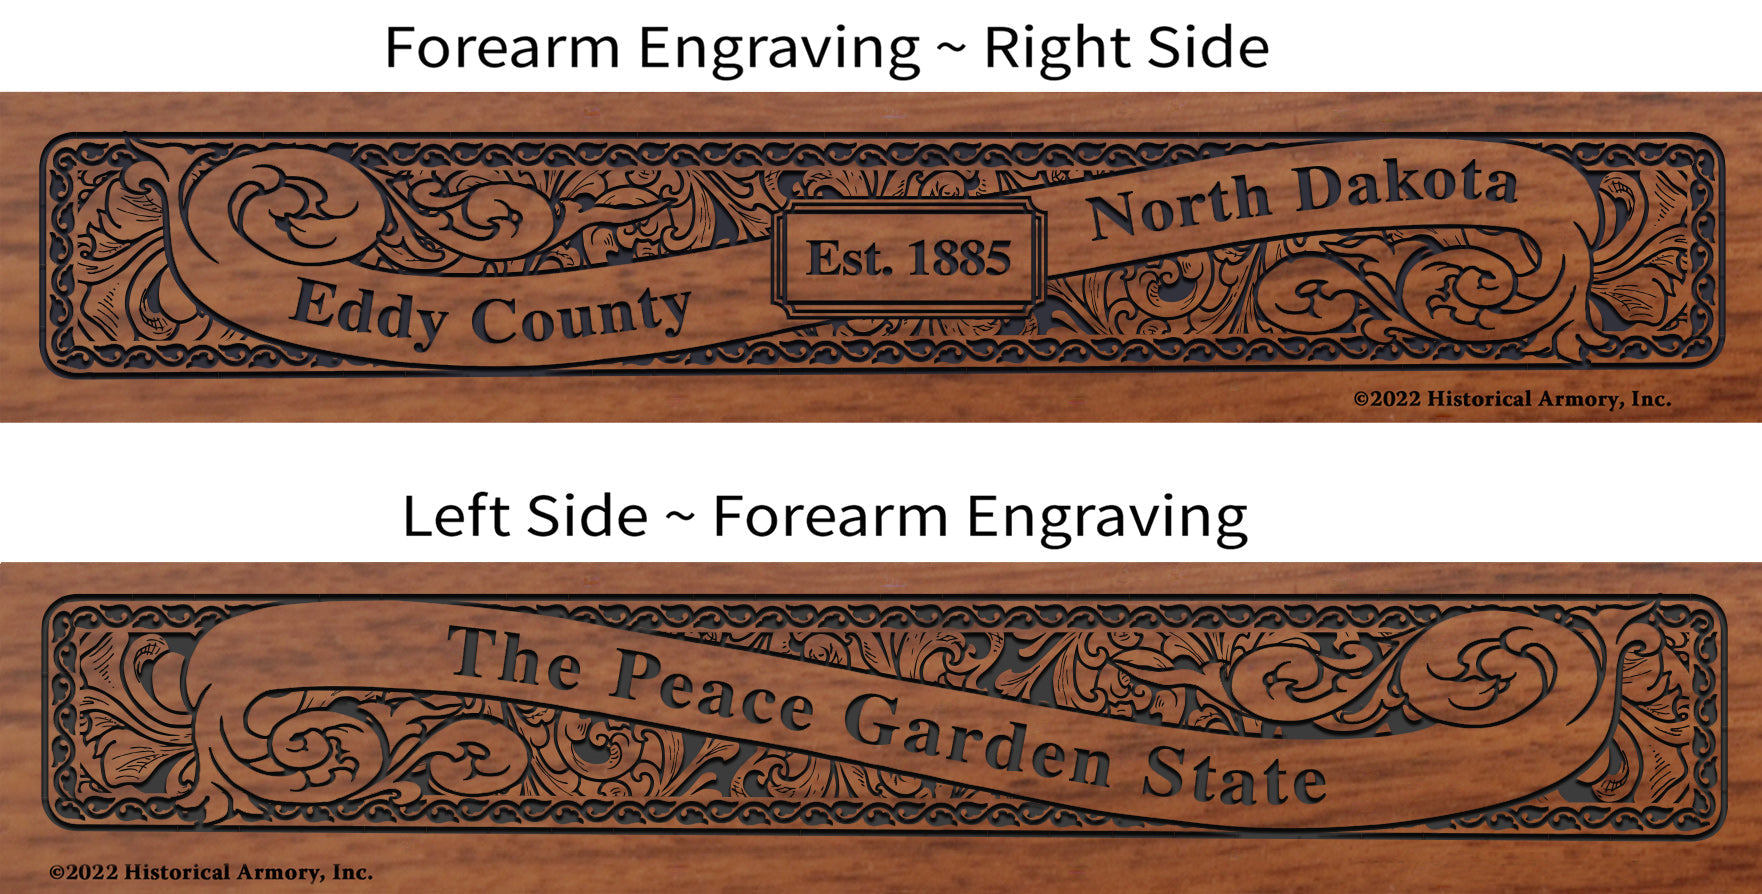 Eddy County North Dakota Engraved Rifle Forearm